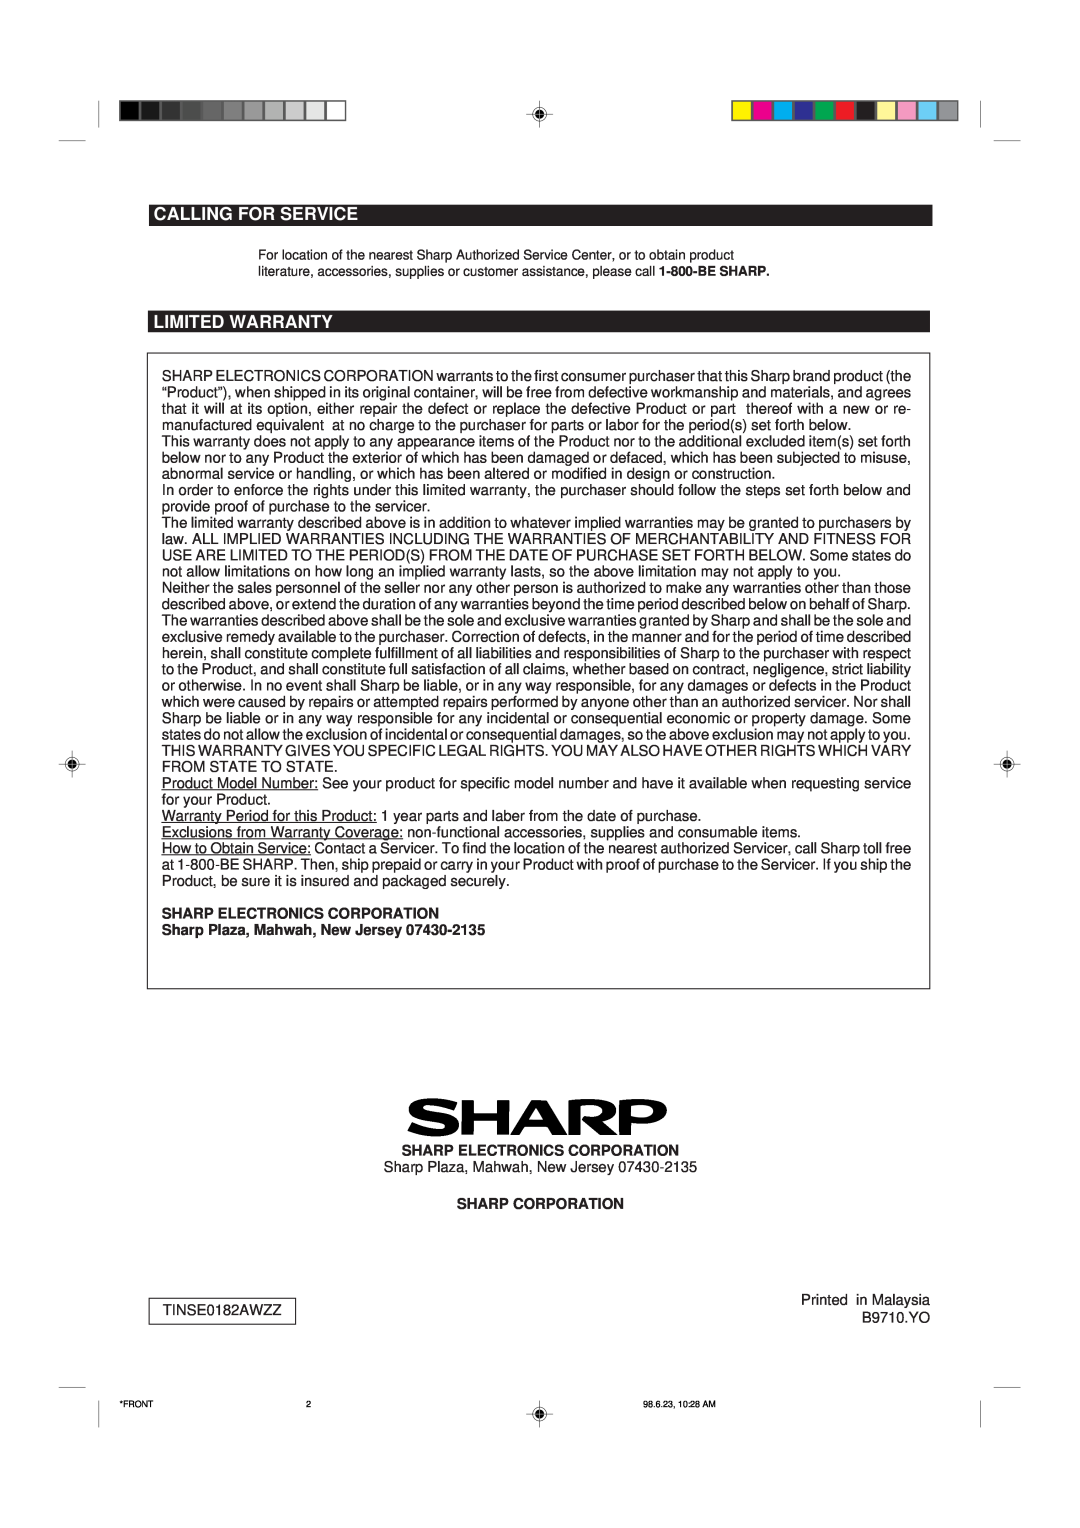 Sharp MD-X8 Calling For Service, Limited Warranty, Sharp Electronics Corporation, Sharp Plaza, Mahwah, New Jersey 